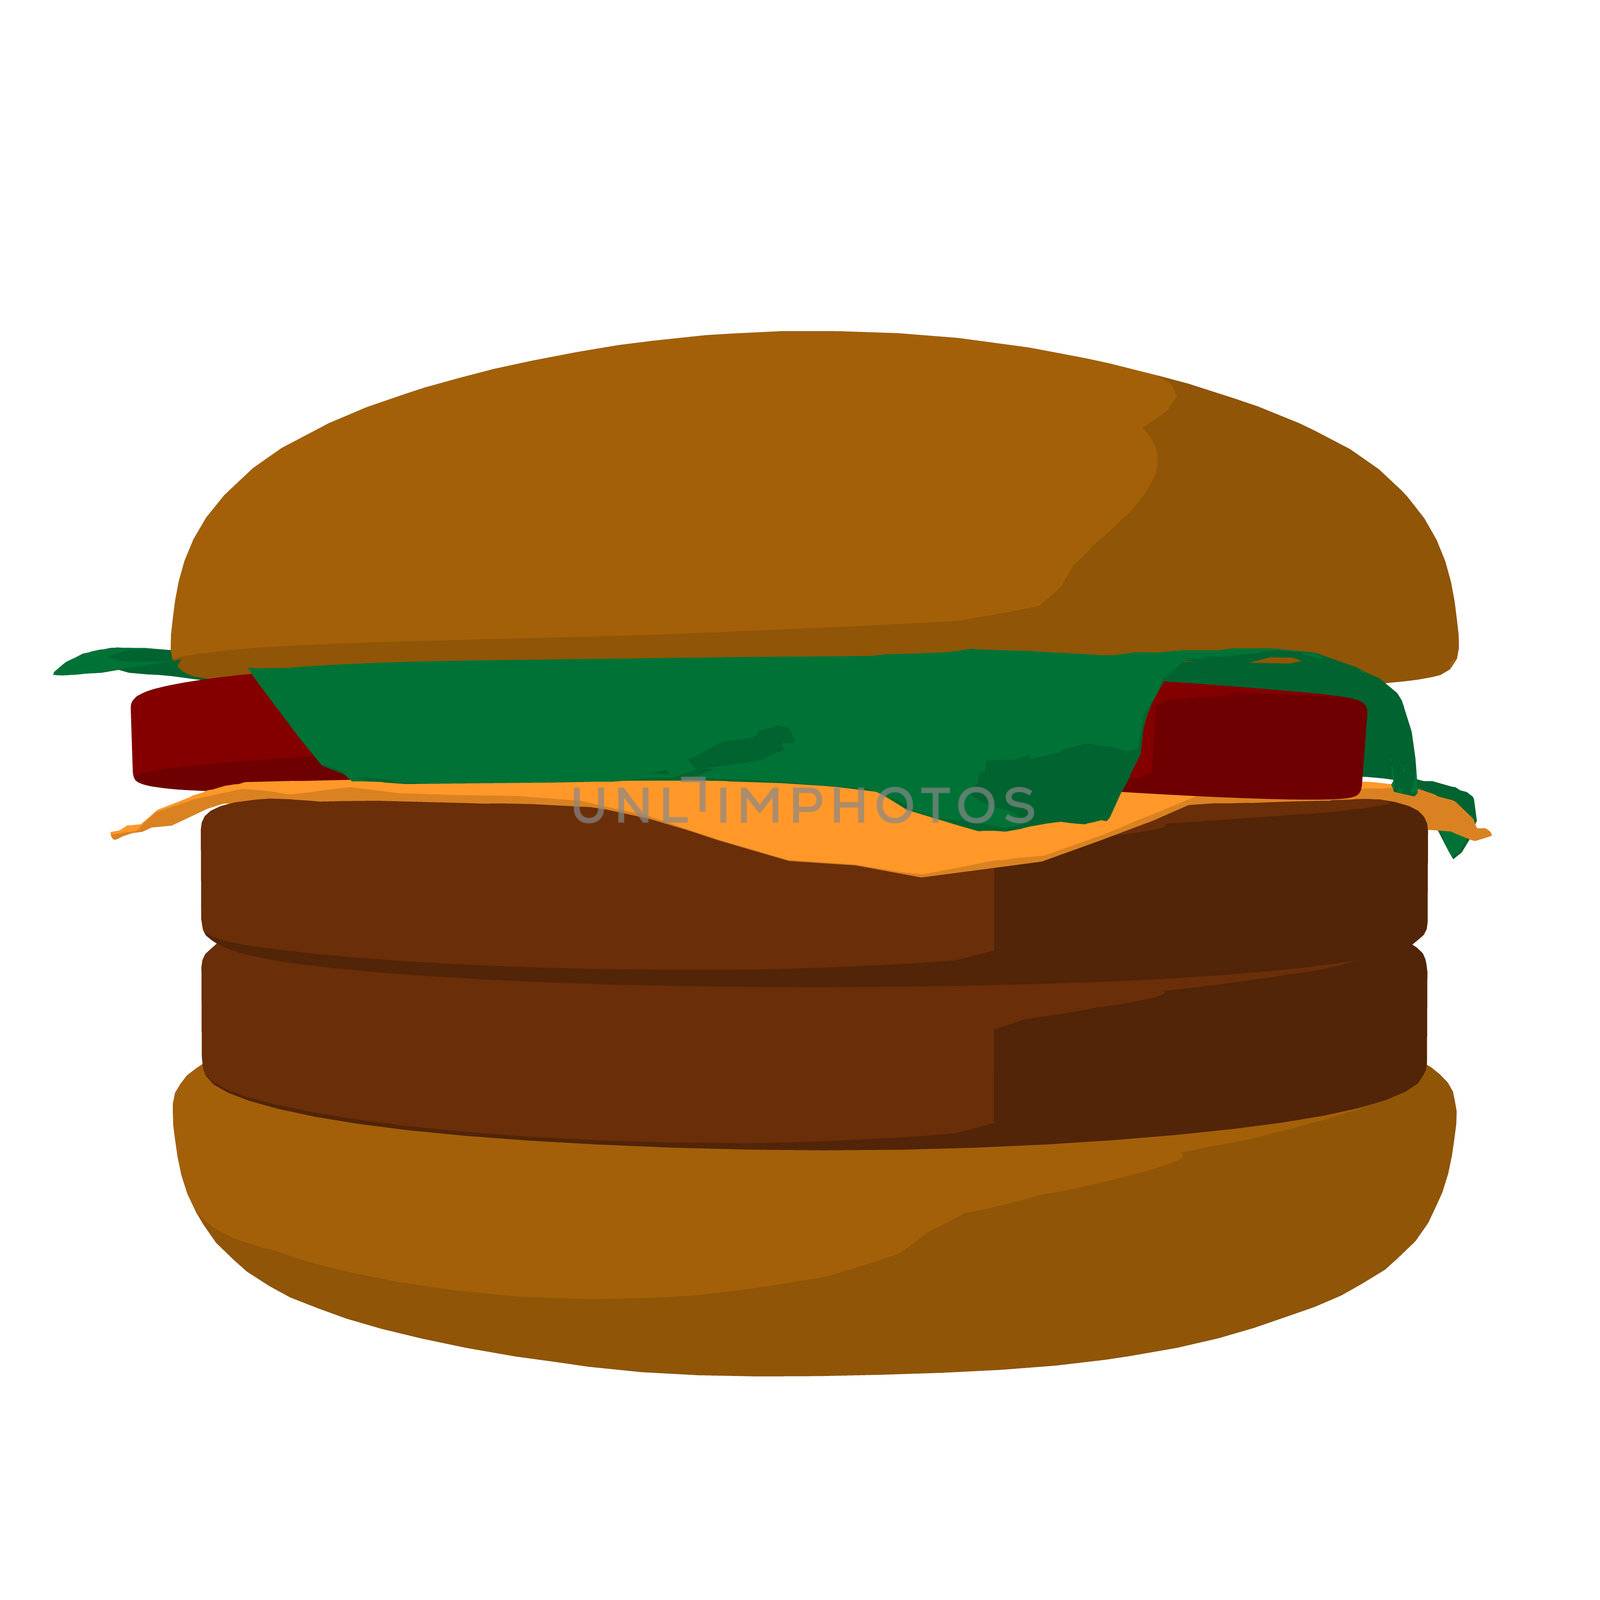 Cheese Burger Illustration by kathygold